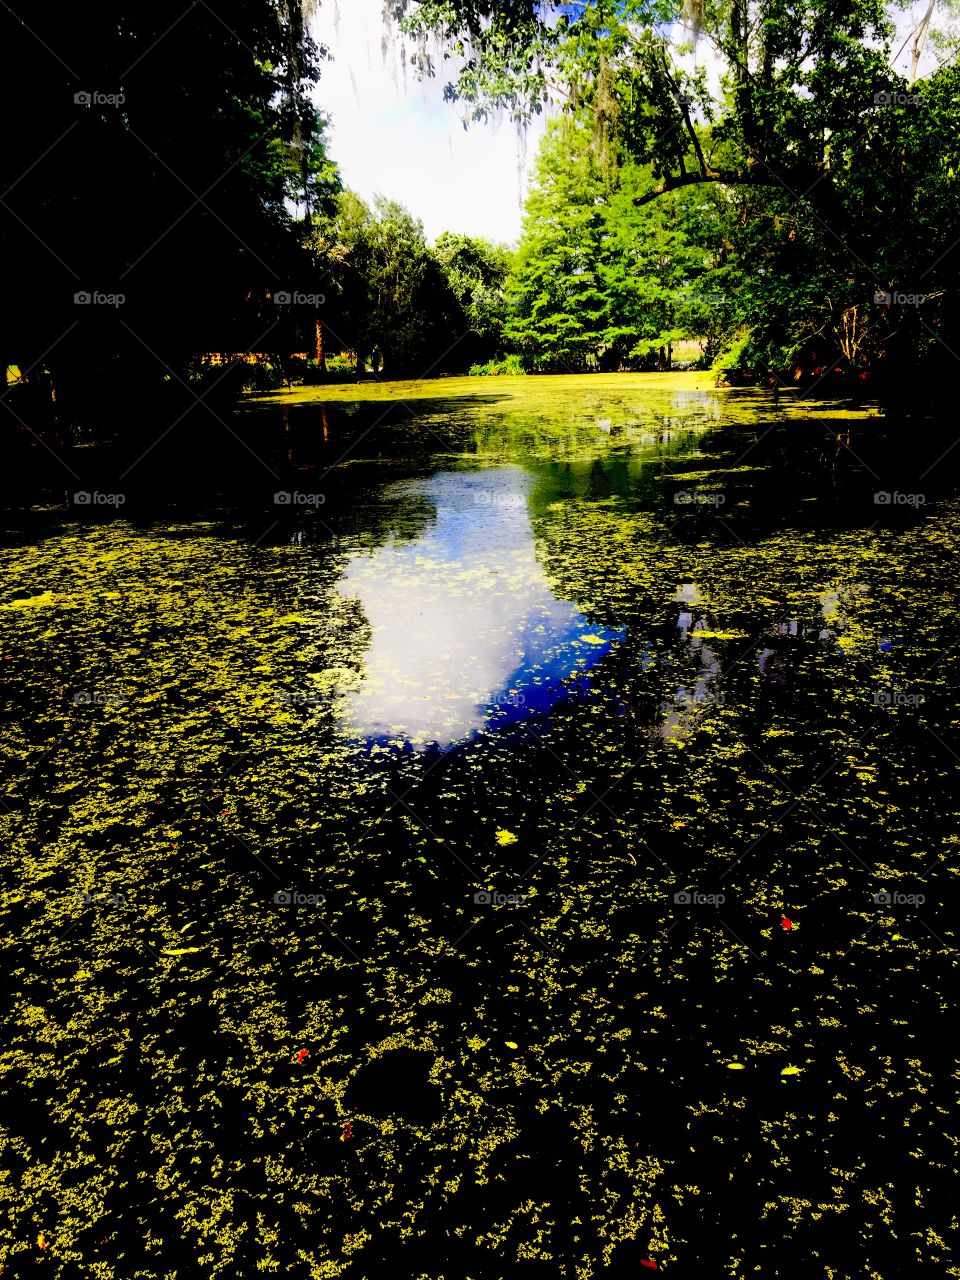 Algae filled pond